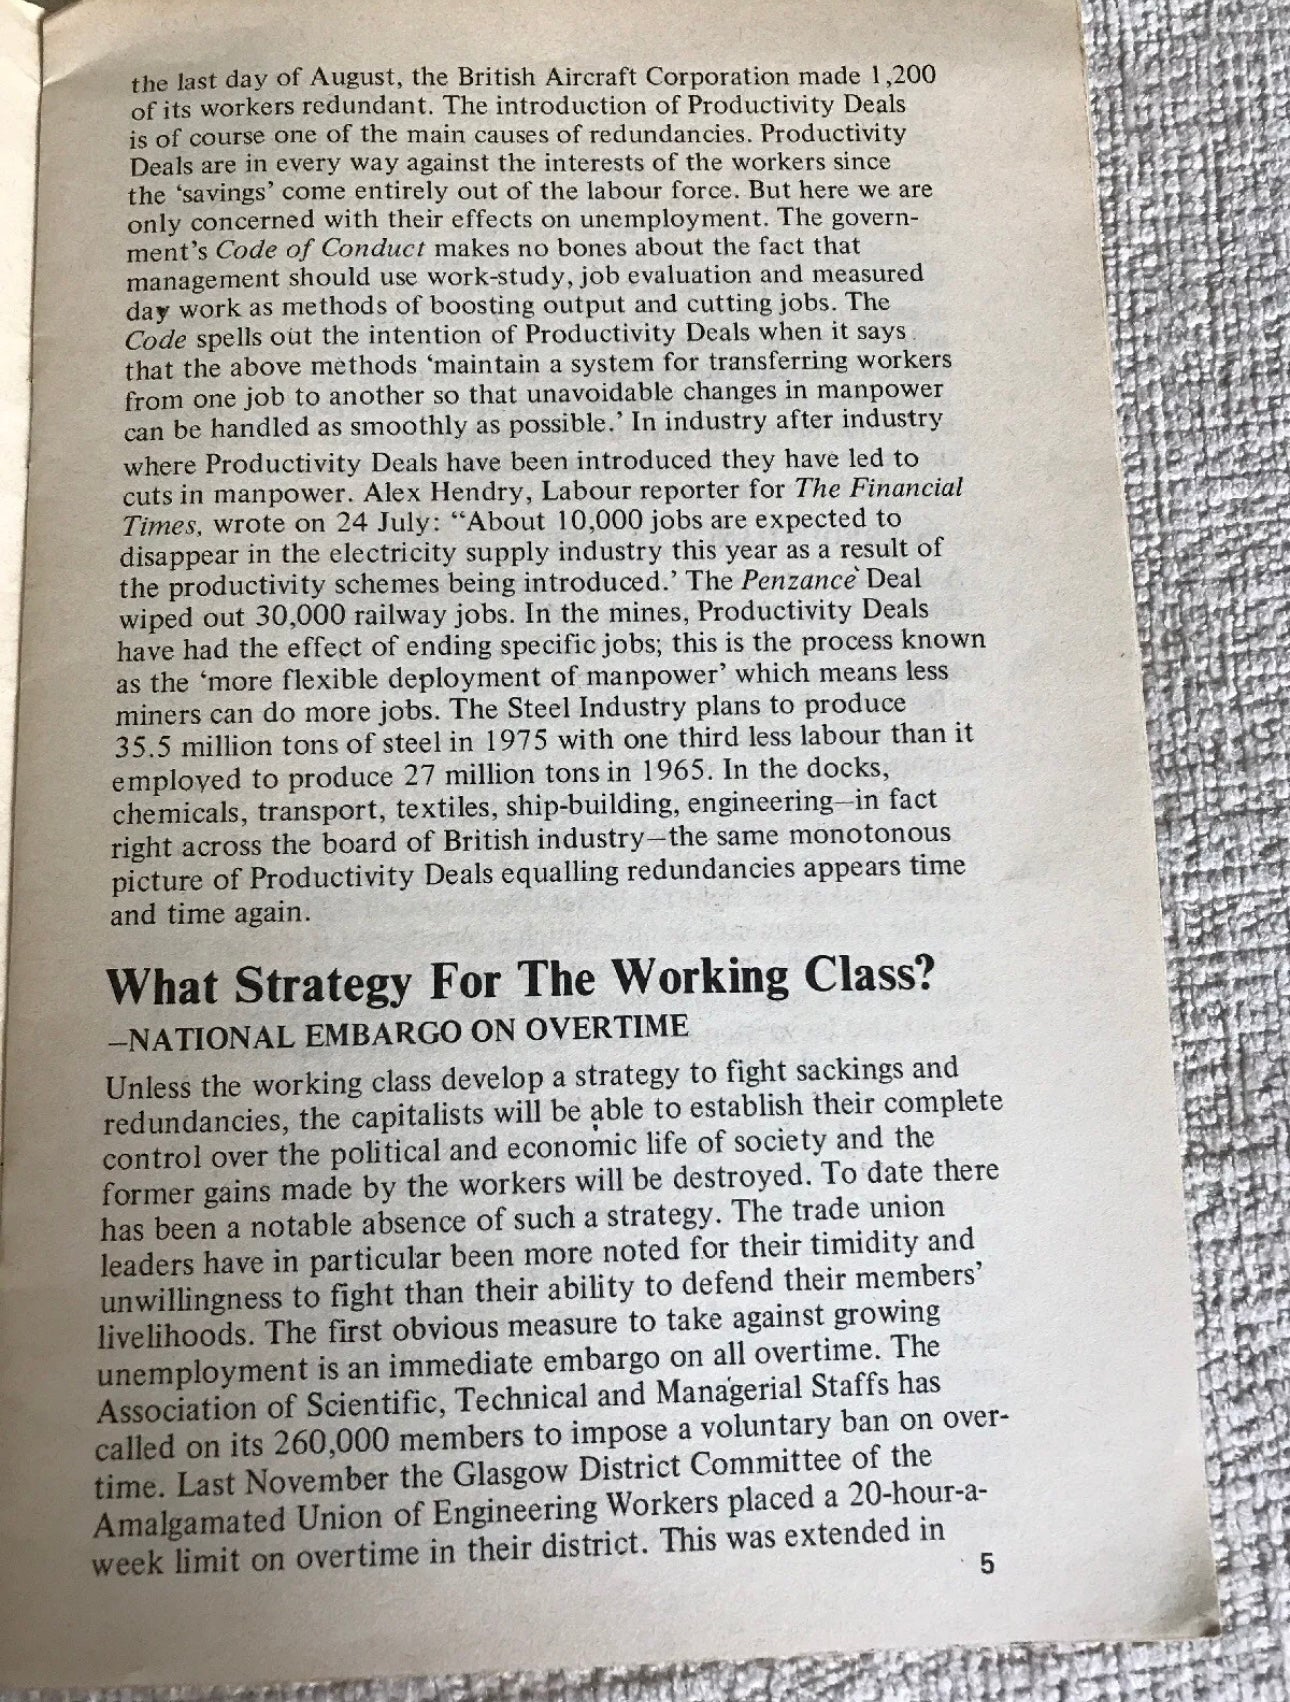 1970’s Unemployment A Weapon Of The Capitalists - Peter Hampton (I. M. G. Pub)